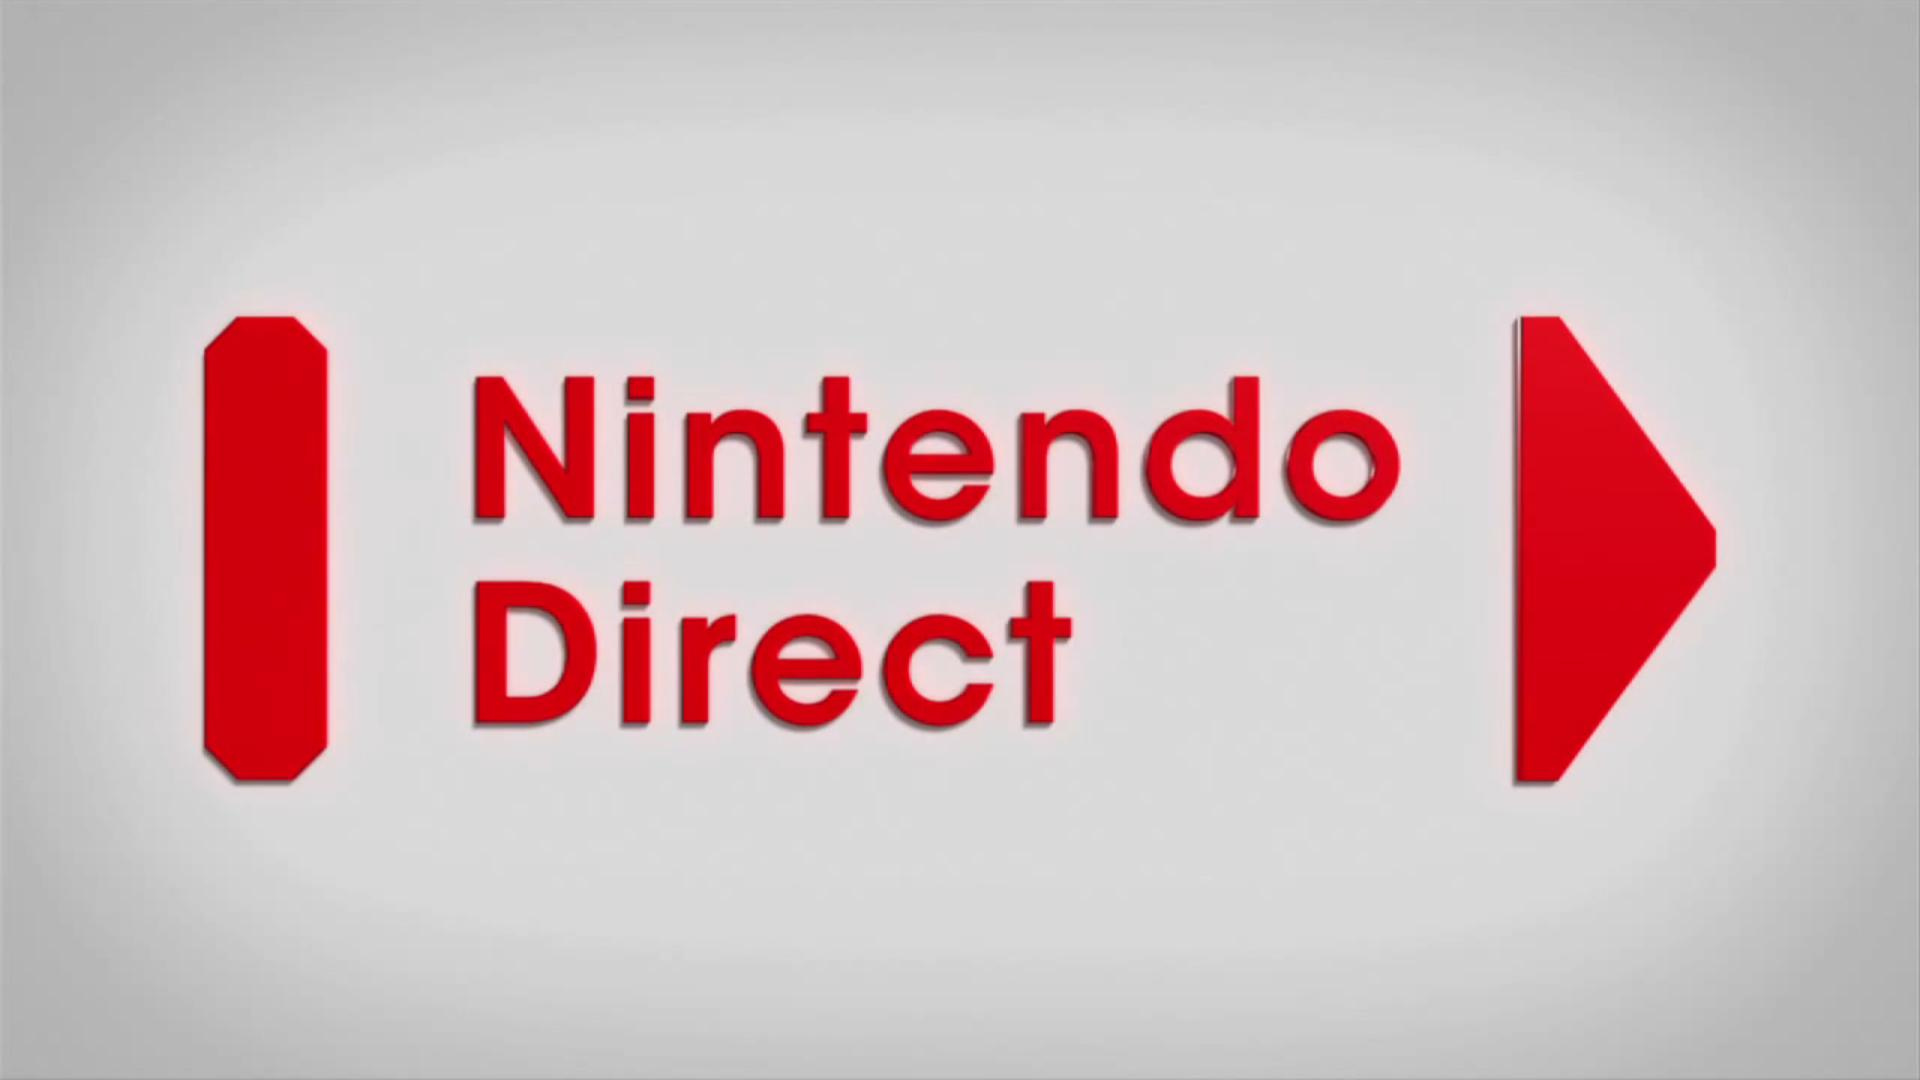 Nintendo Direct at E3